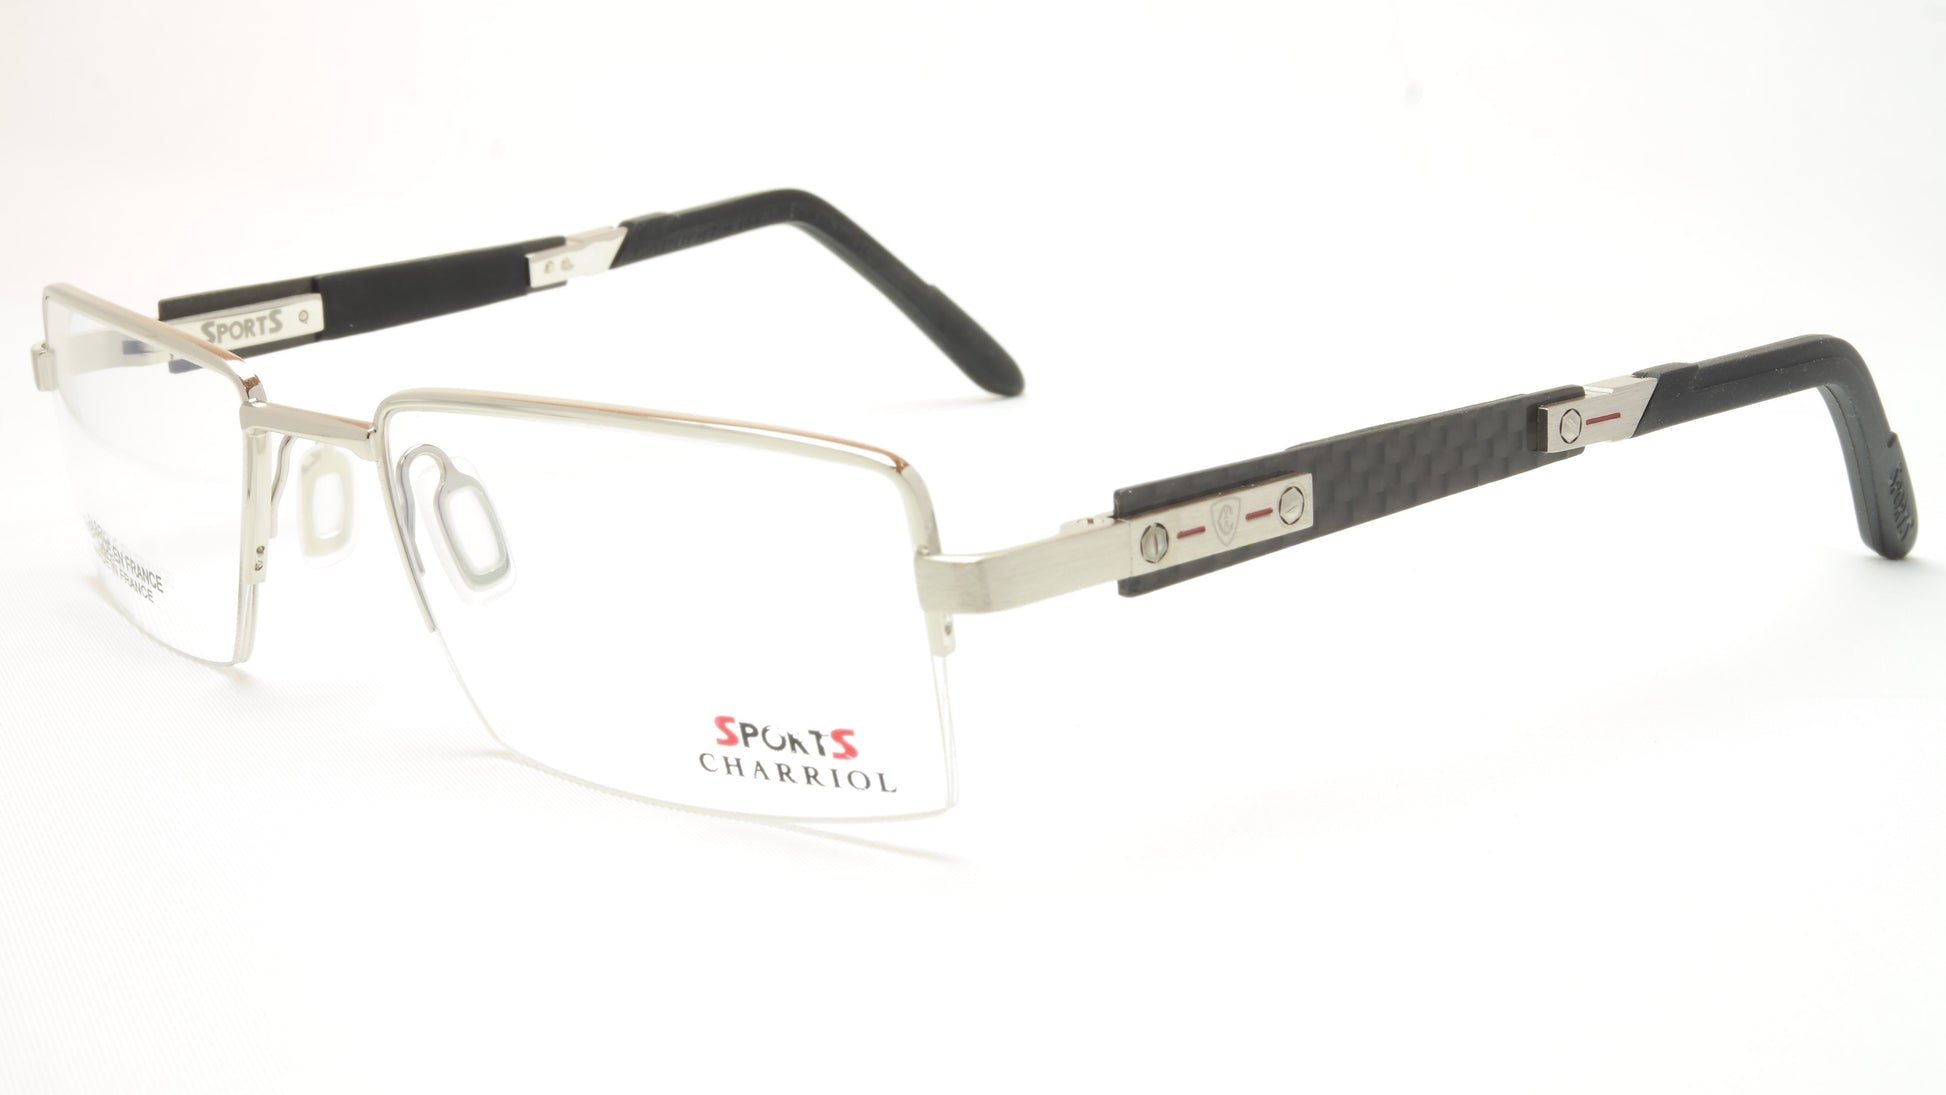 Charriol Eyeglasses Frame SP23003 C3 Sports Carbon Chrome Black France Made - Frame Bay